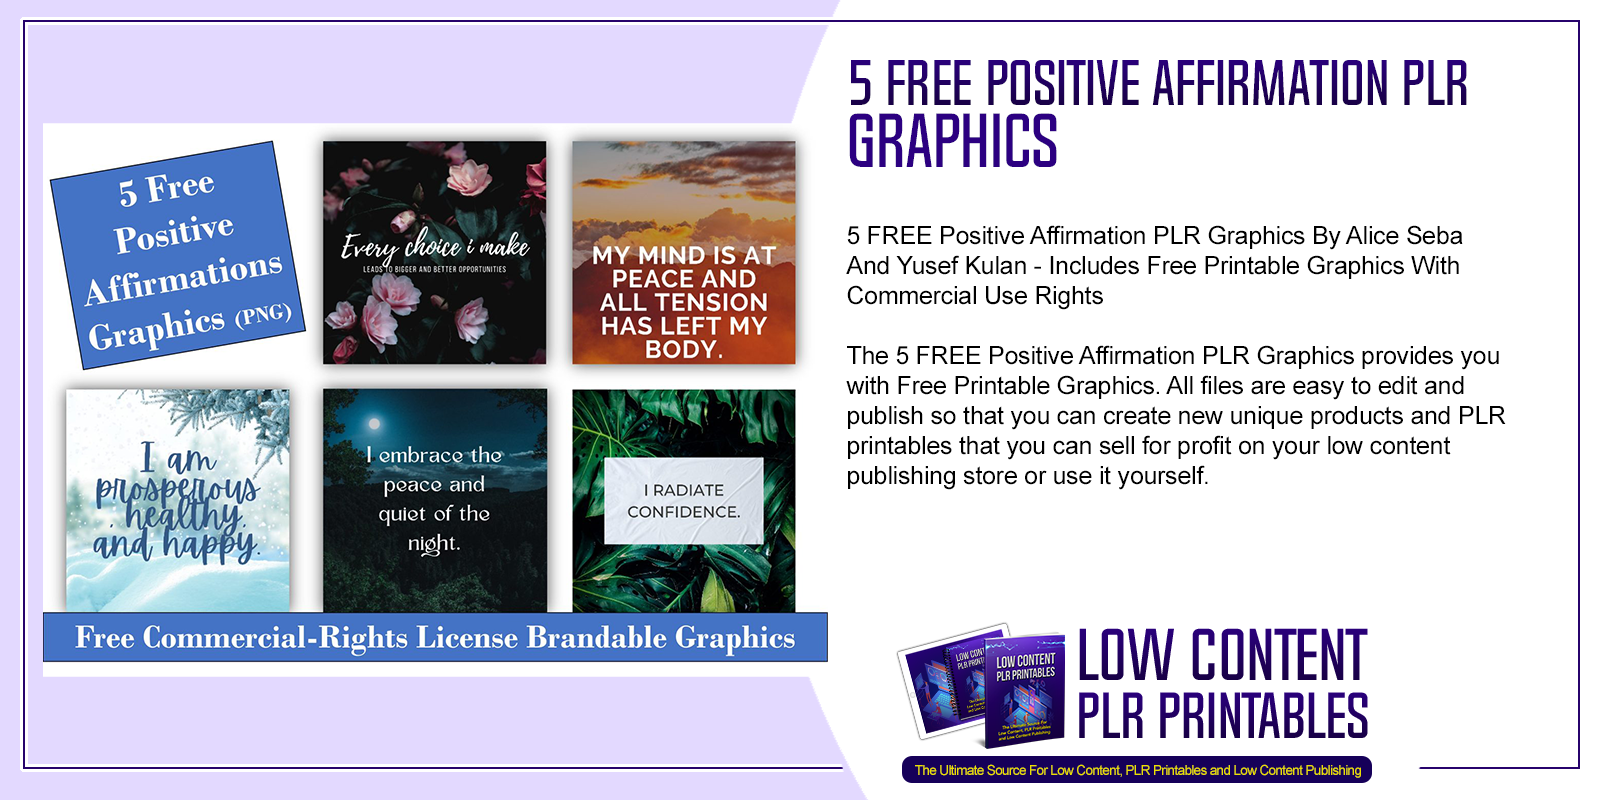 5 FREE Positive Affirmation PLR Graphics